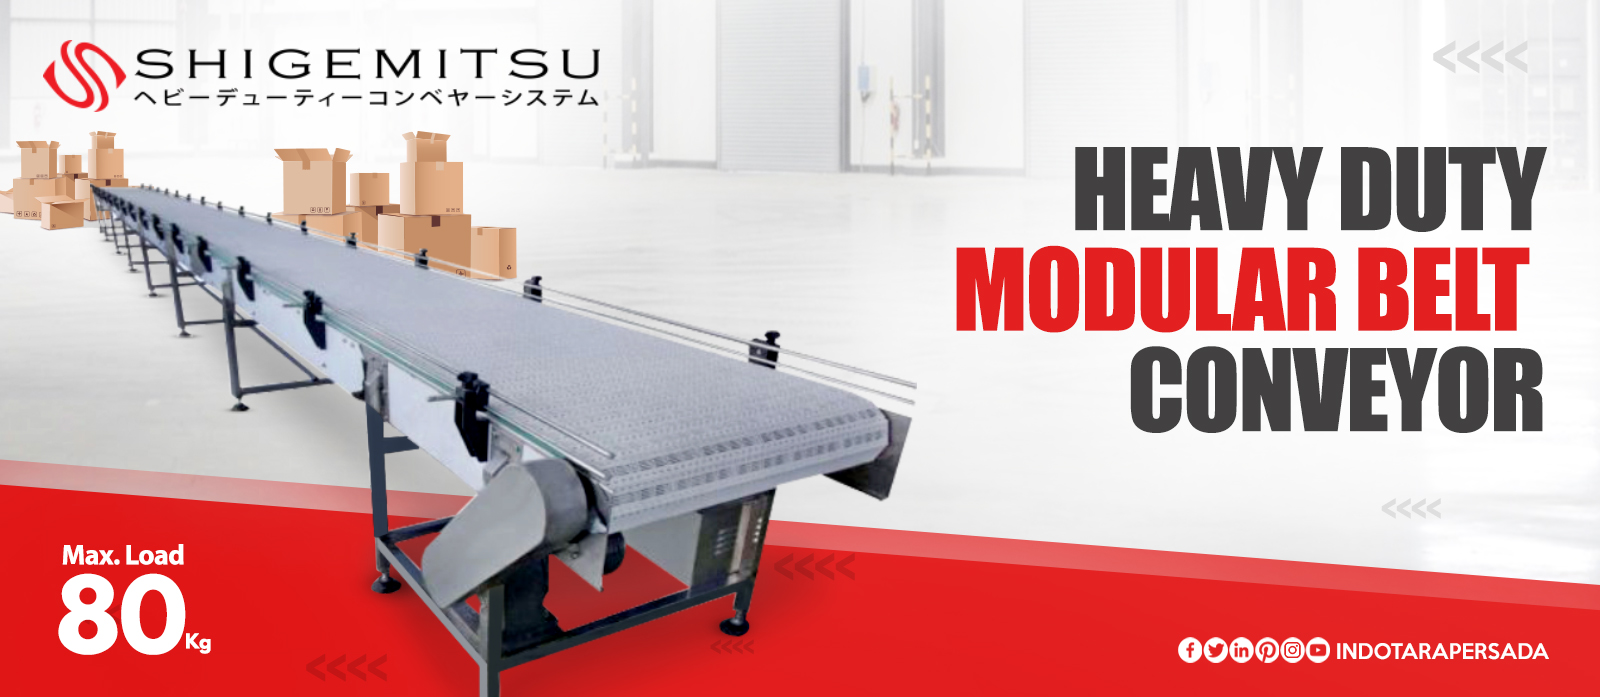 Jual Shigemitsu Modular Belt Conveyor, Harga Modular Belt Conveyor, Jual Modular Belt Conveyor Dengan Harga Murah